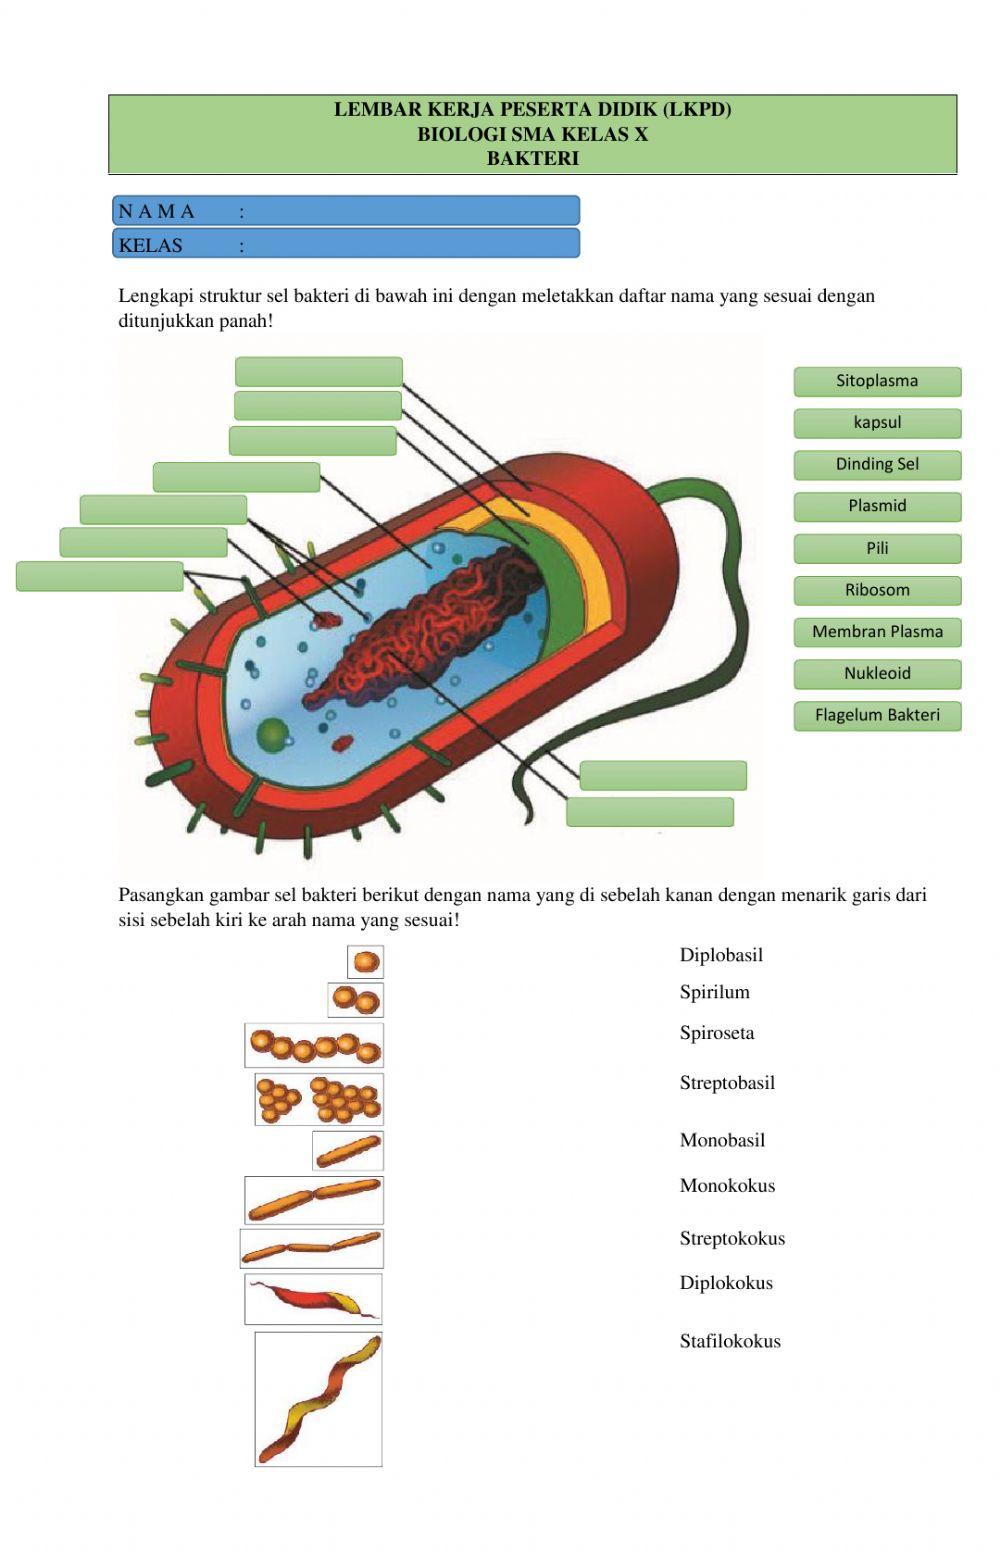 Lkpd-biologi x-bakteri